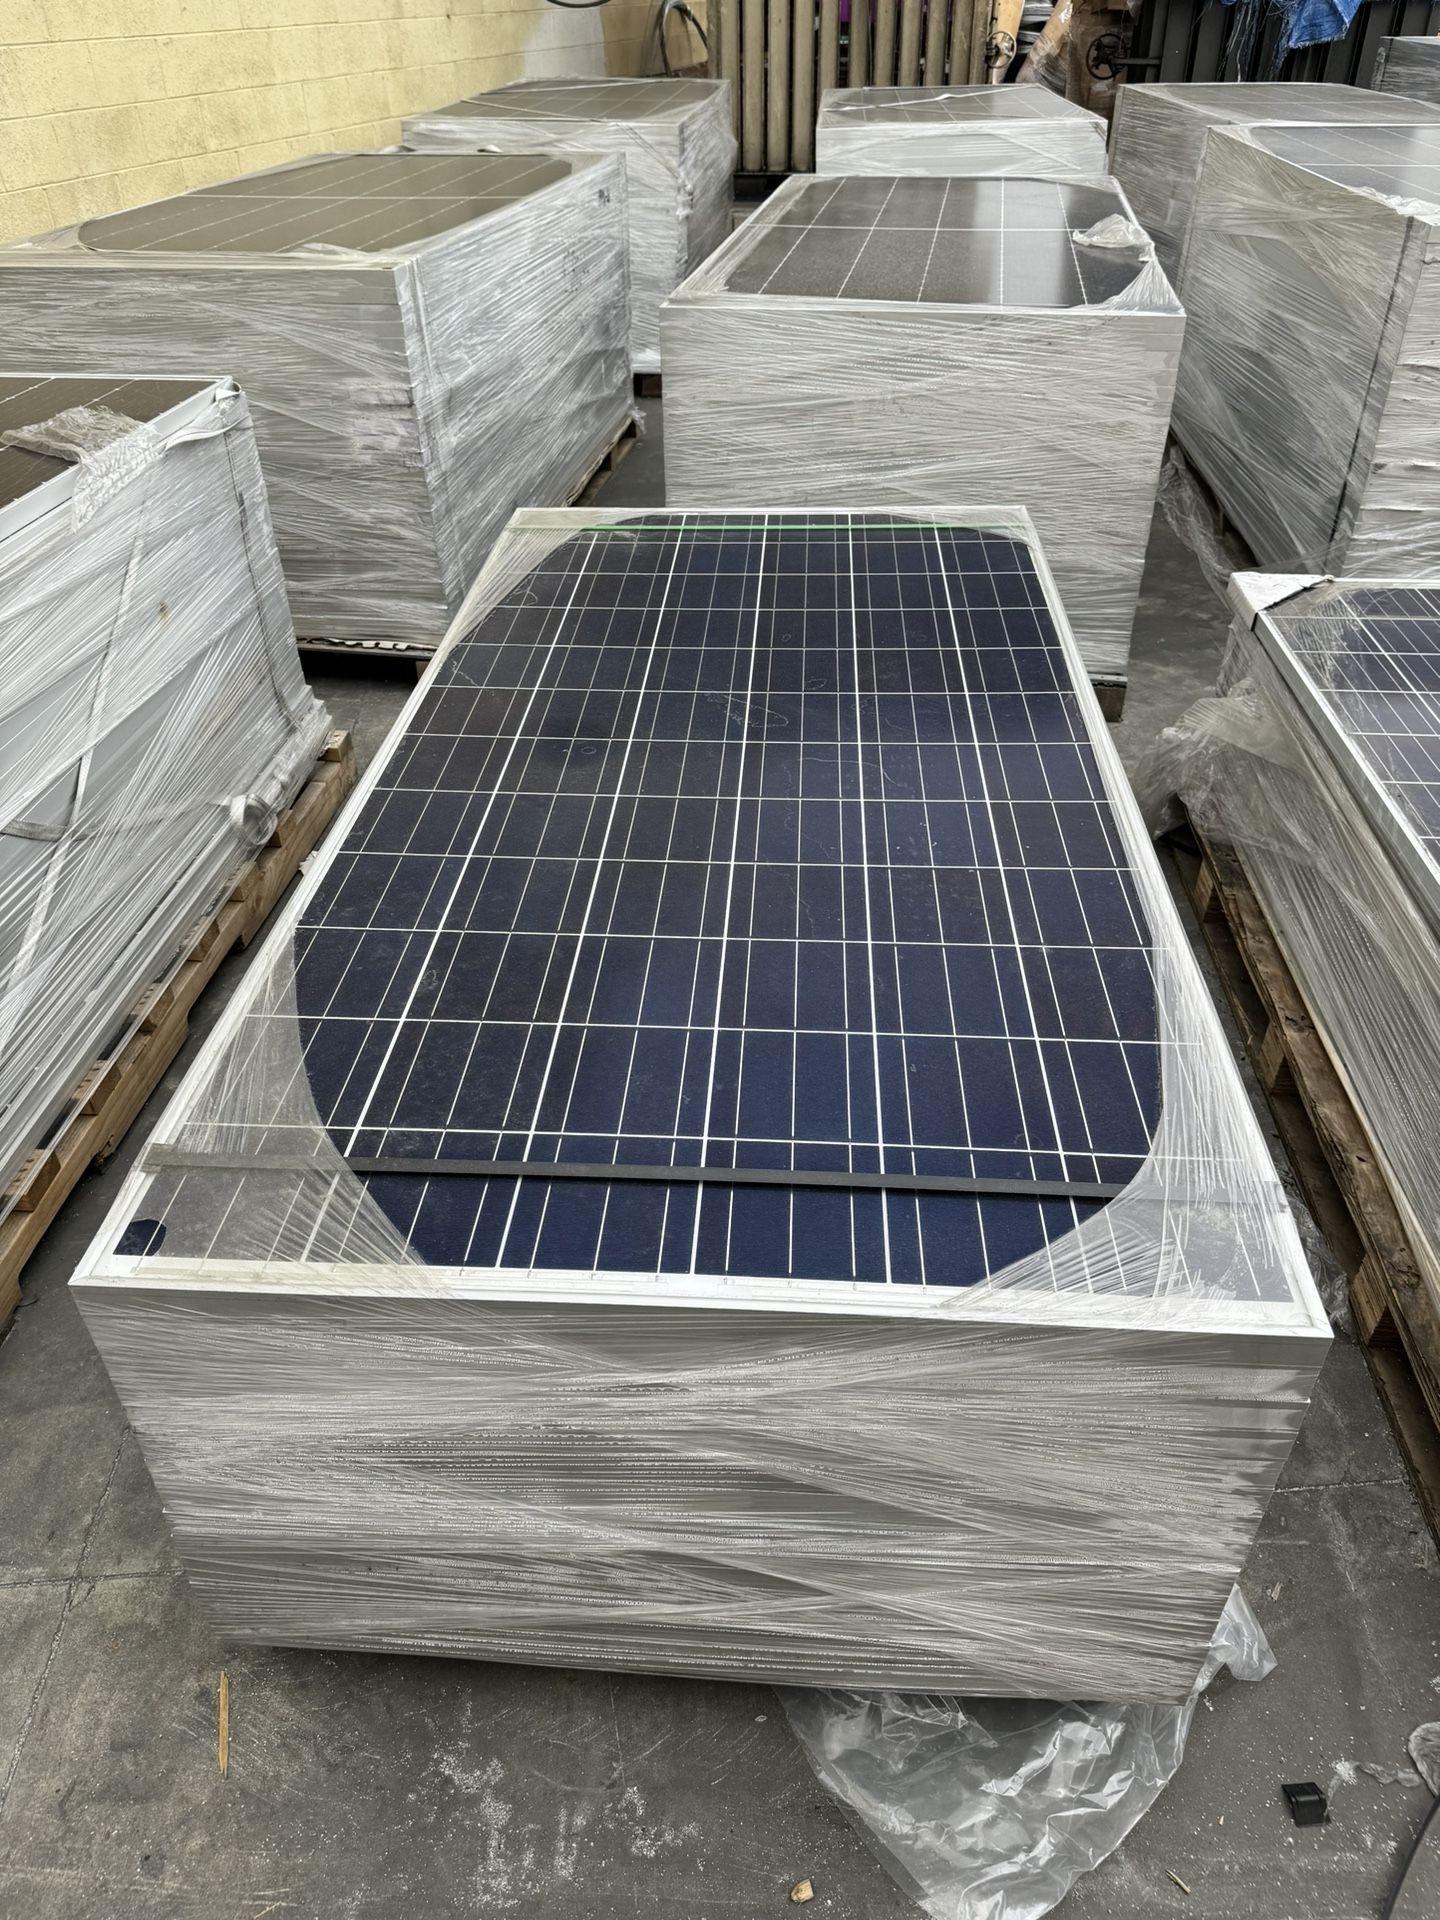 310W Solar Panel HSL72P6-PC-3-310Q Dimension: 77.6x39.1x1.6 In. (14 PCS Left, Price for Each)